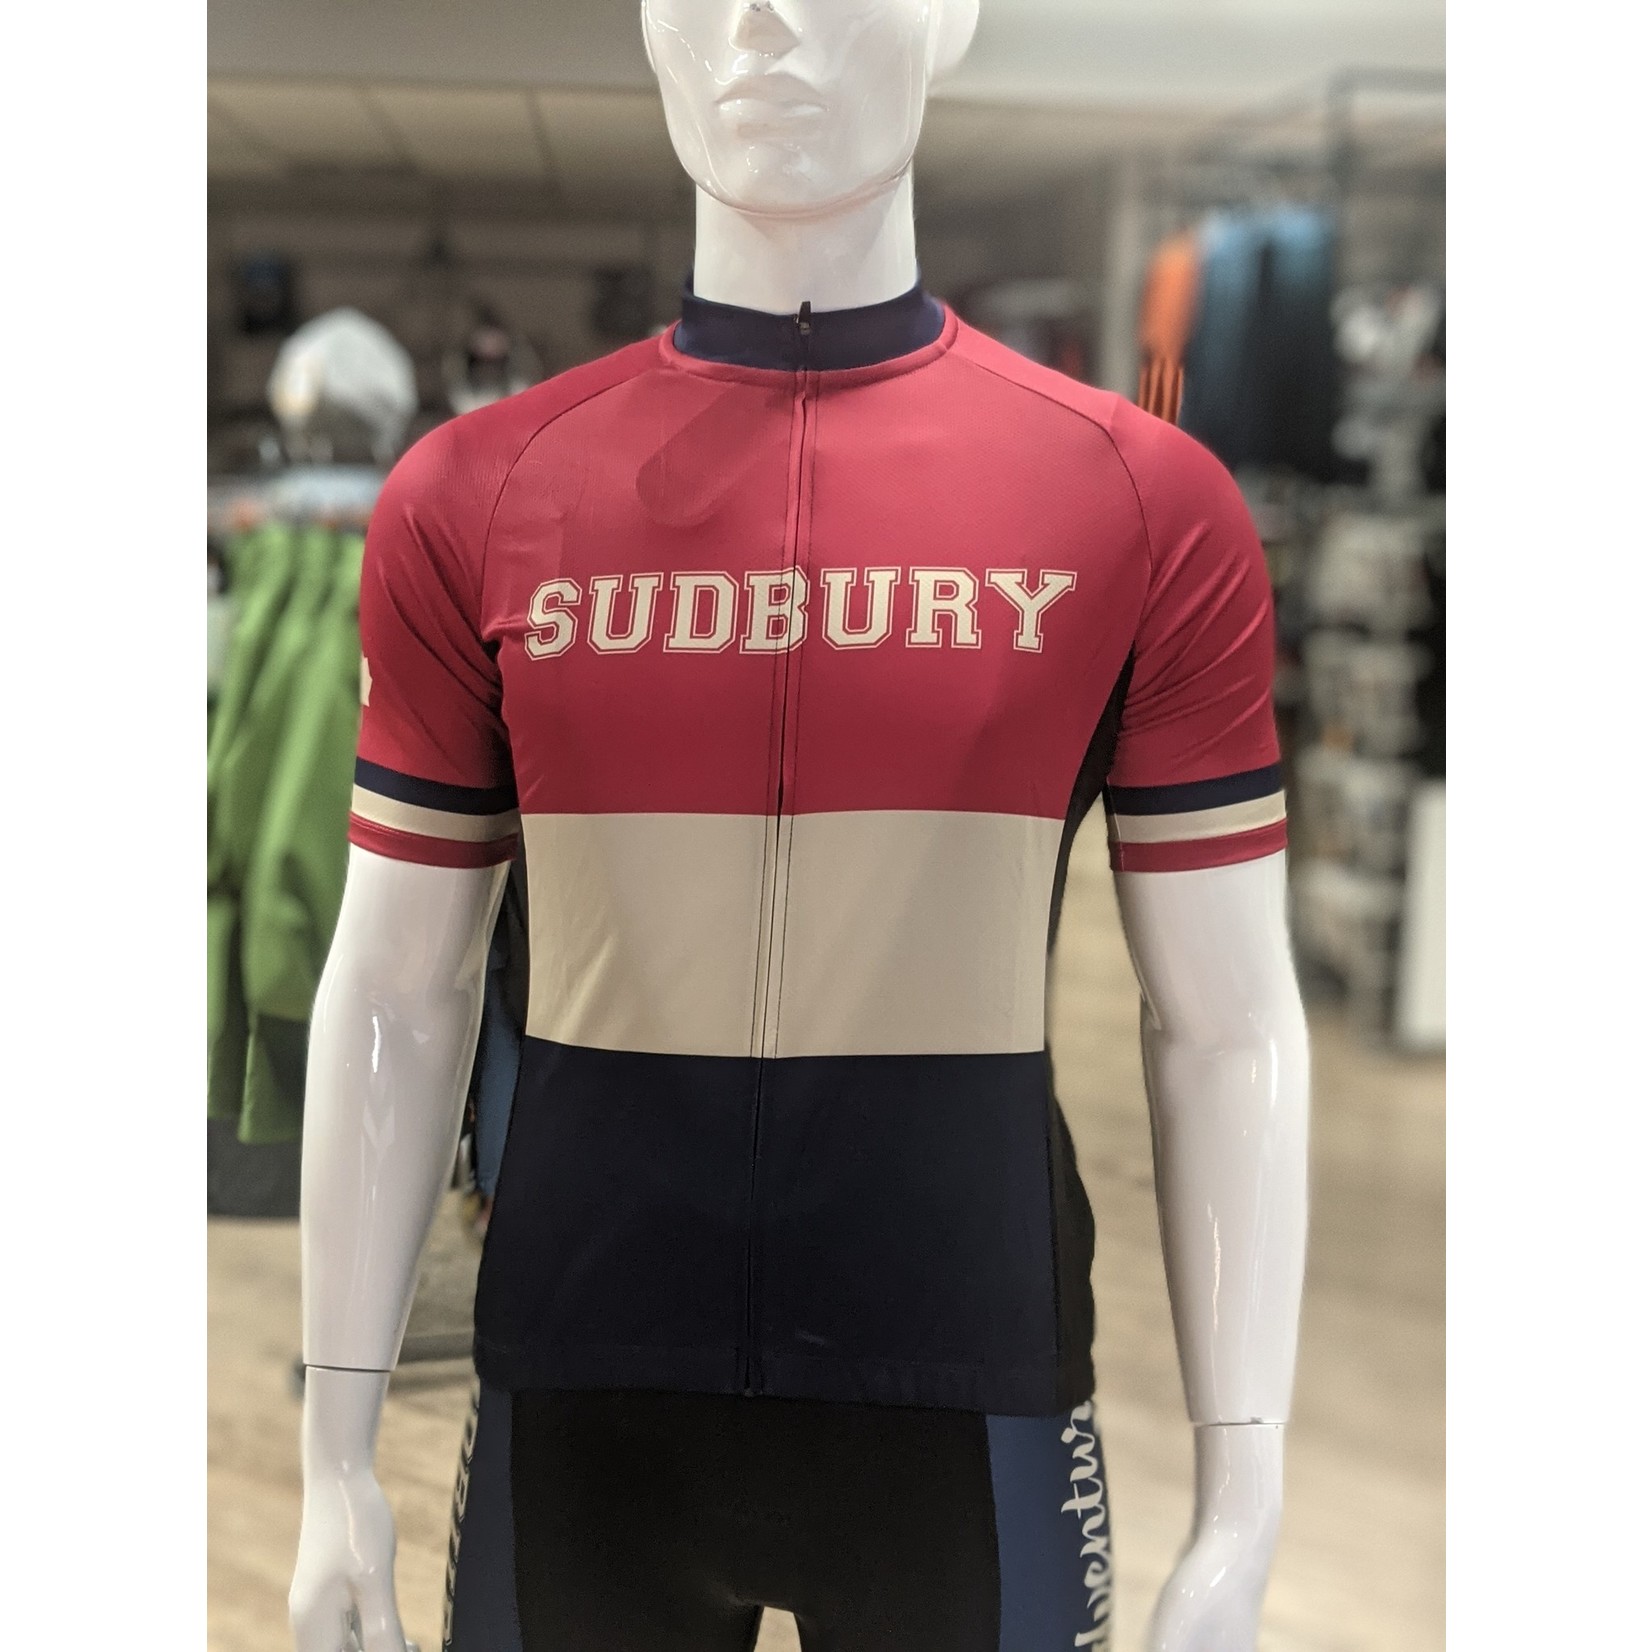 2022 Sudbury Jersey - Men's